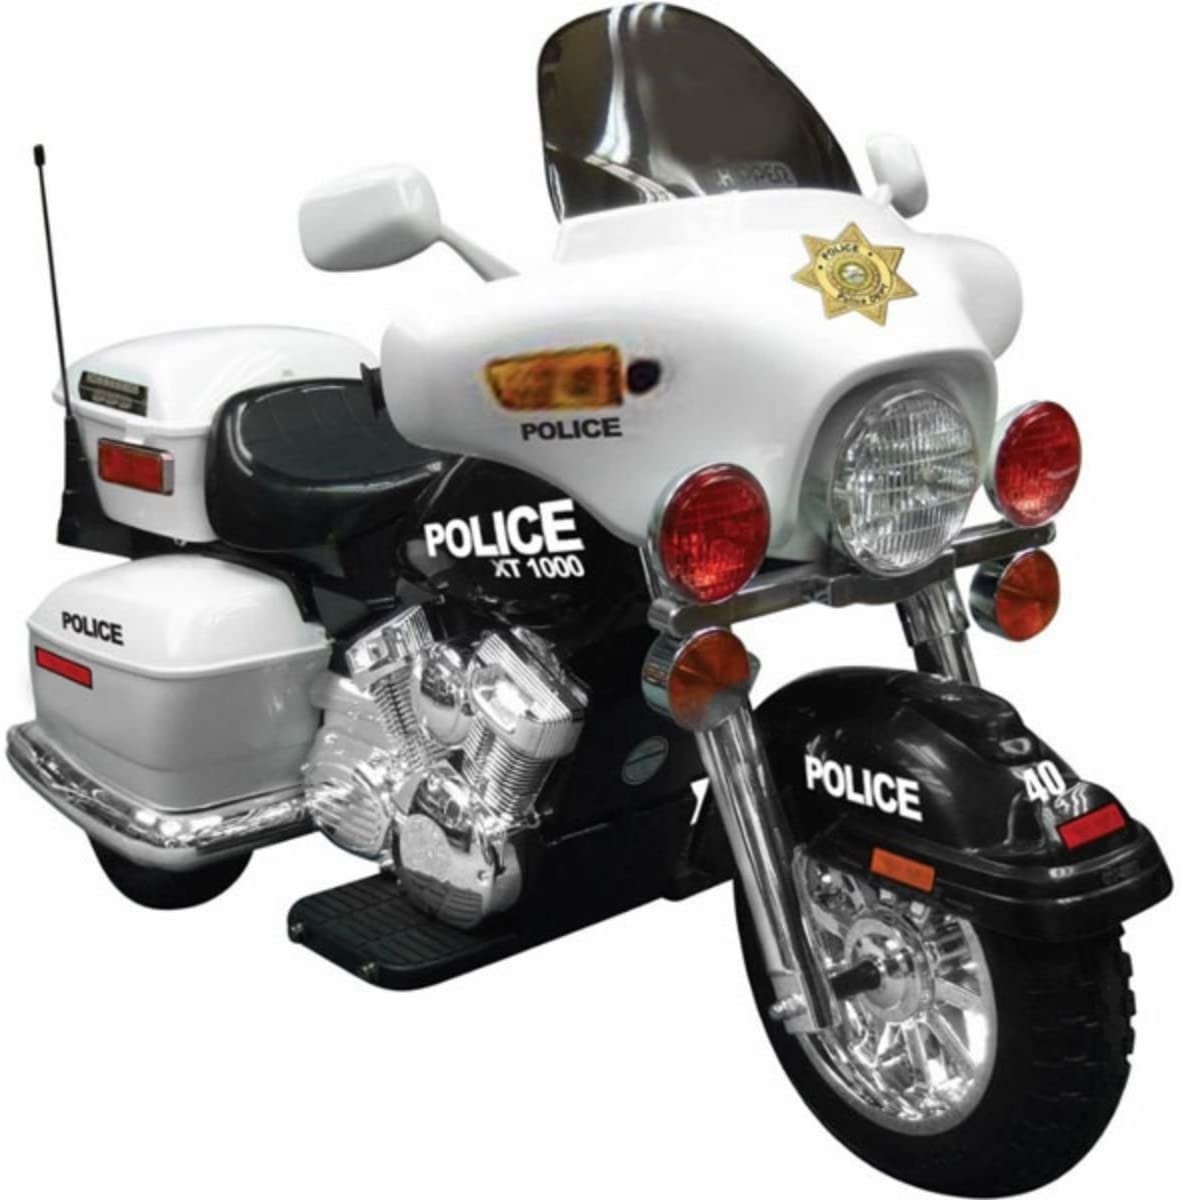 NPL Patrol 12V Battery Powered Police Motorcycle